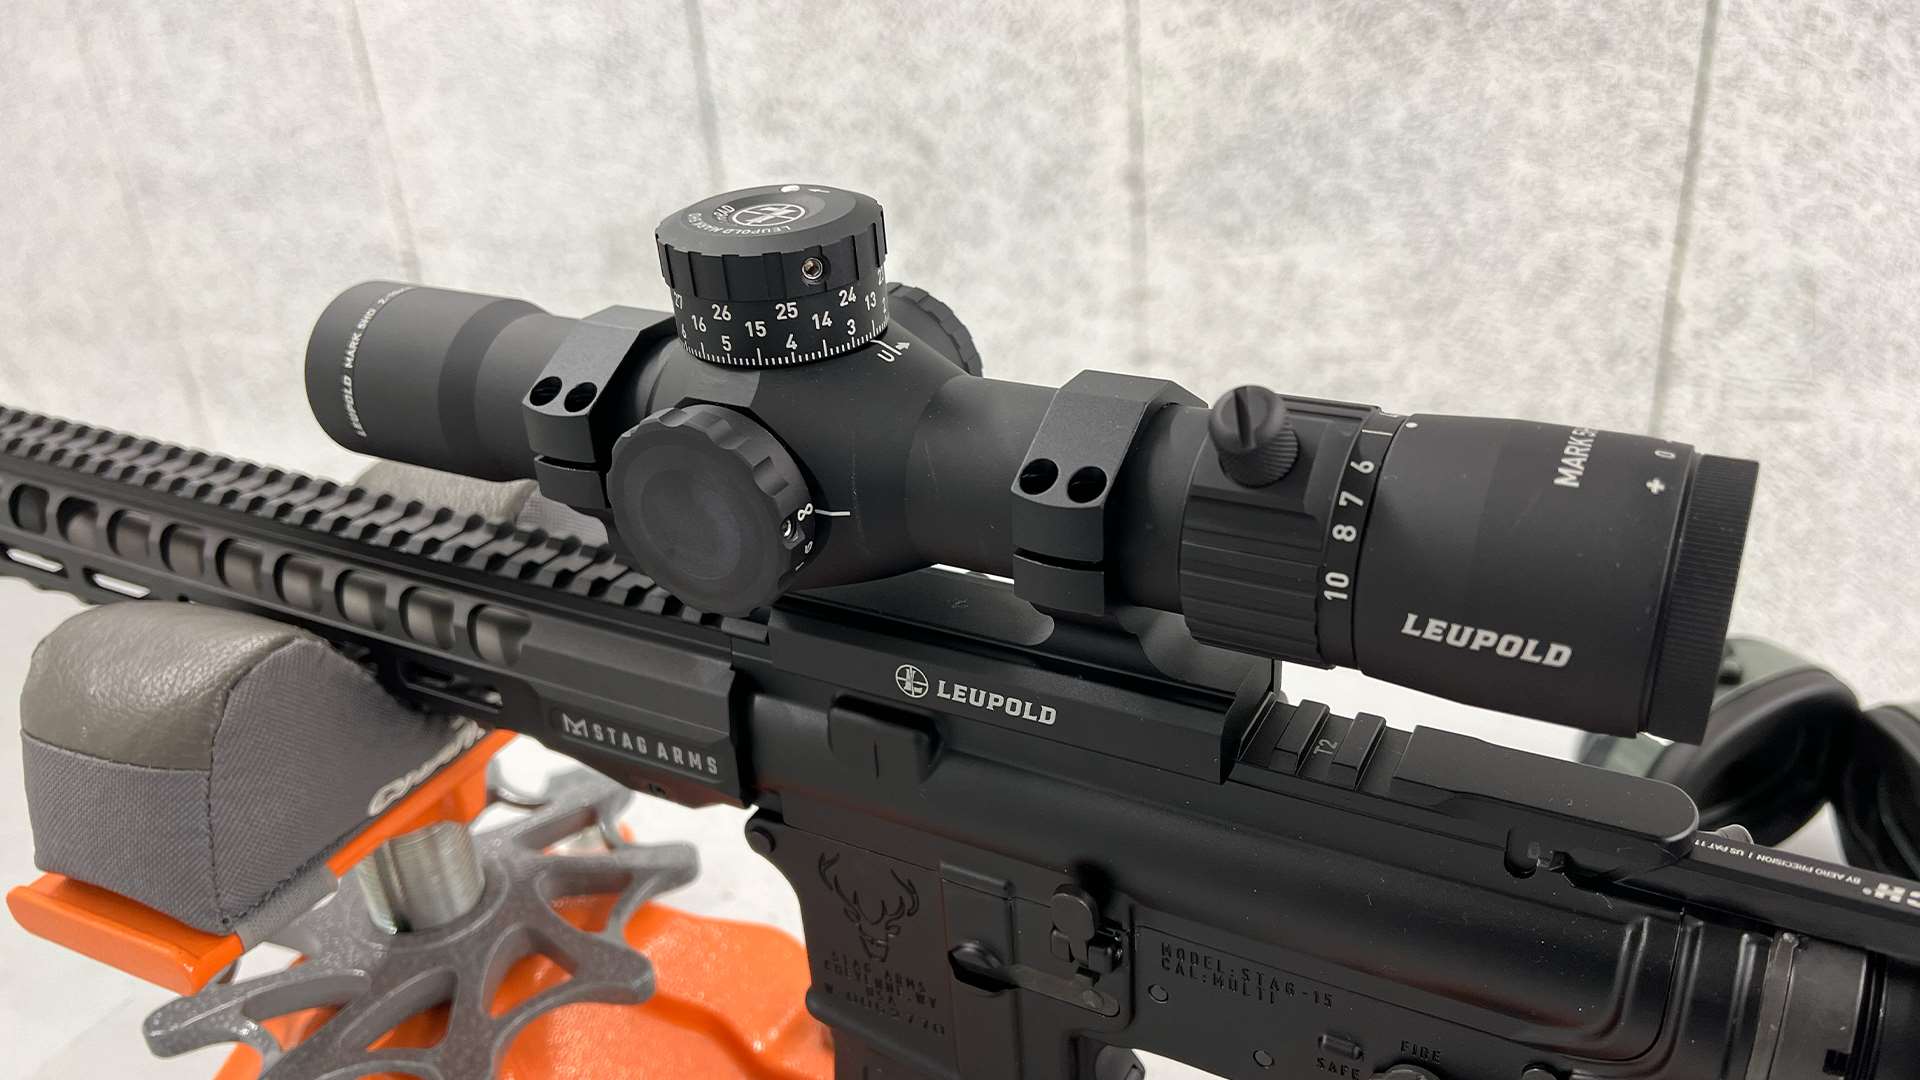 Leupold optic and  Mark AR IMS one-piece mount